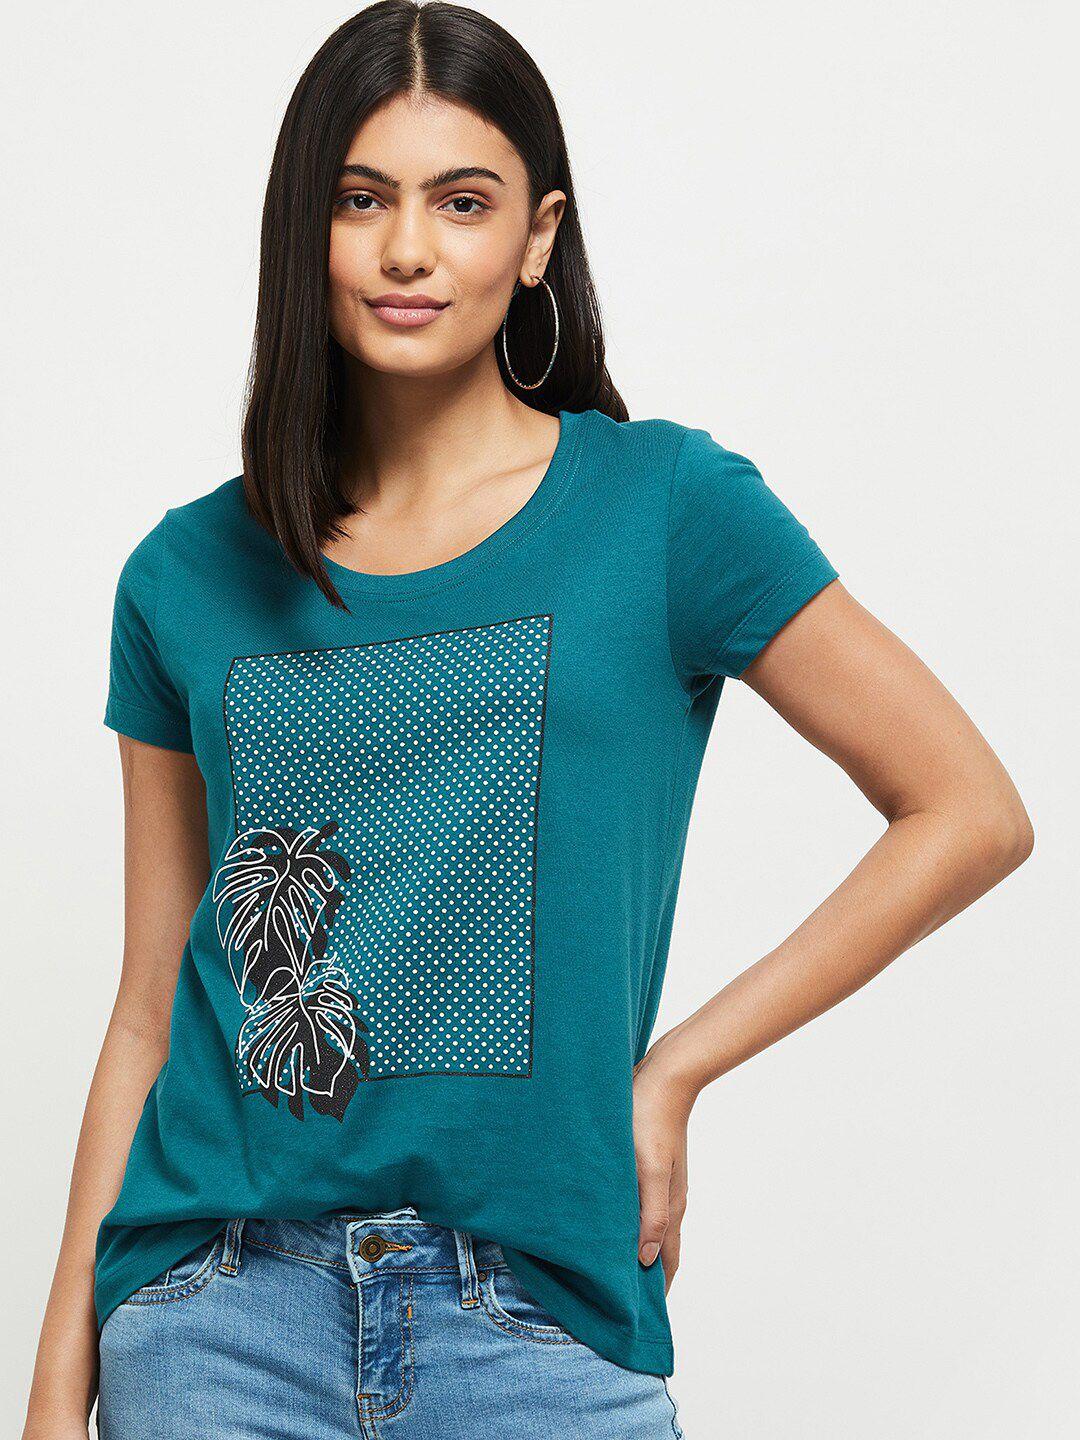 max-women-teal-printed-cotton-t-shirt